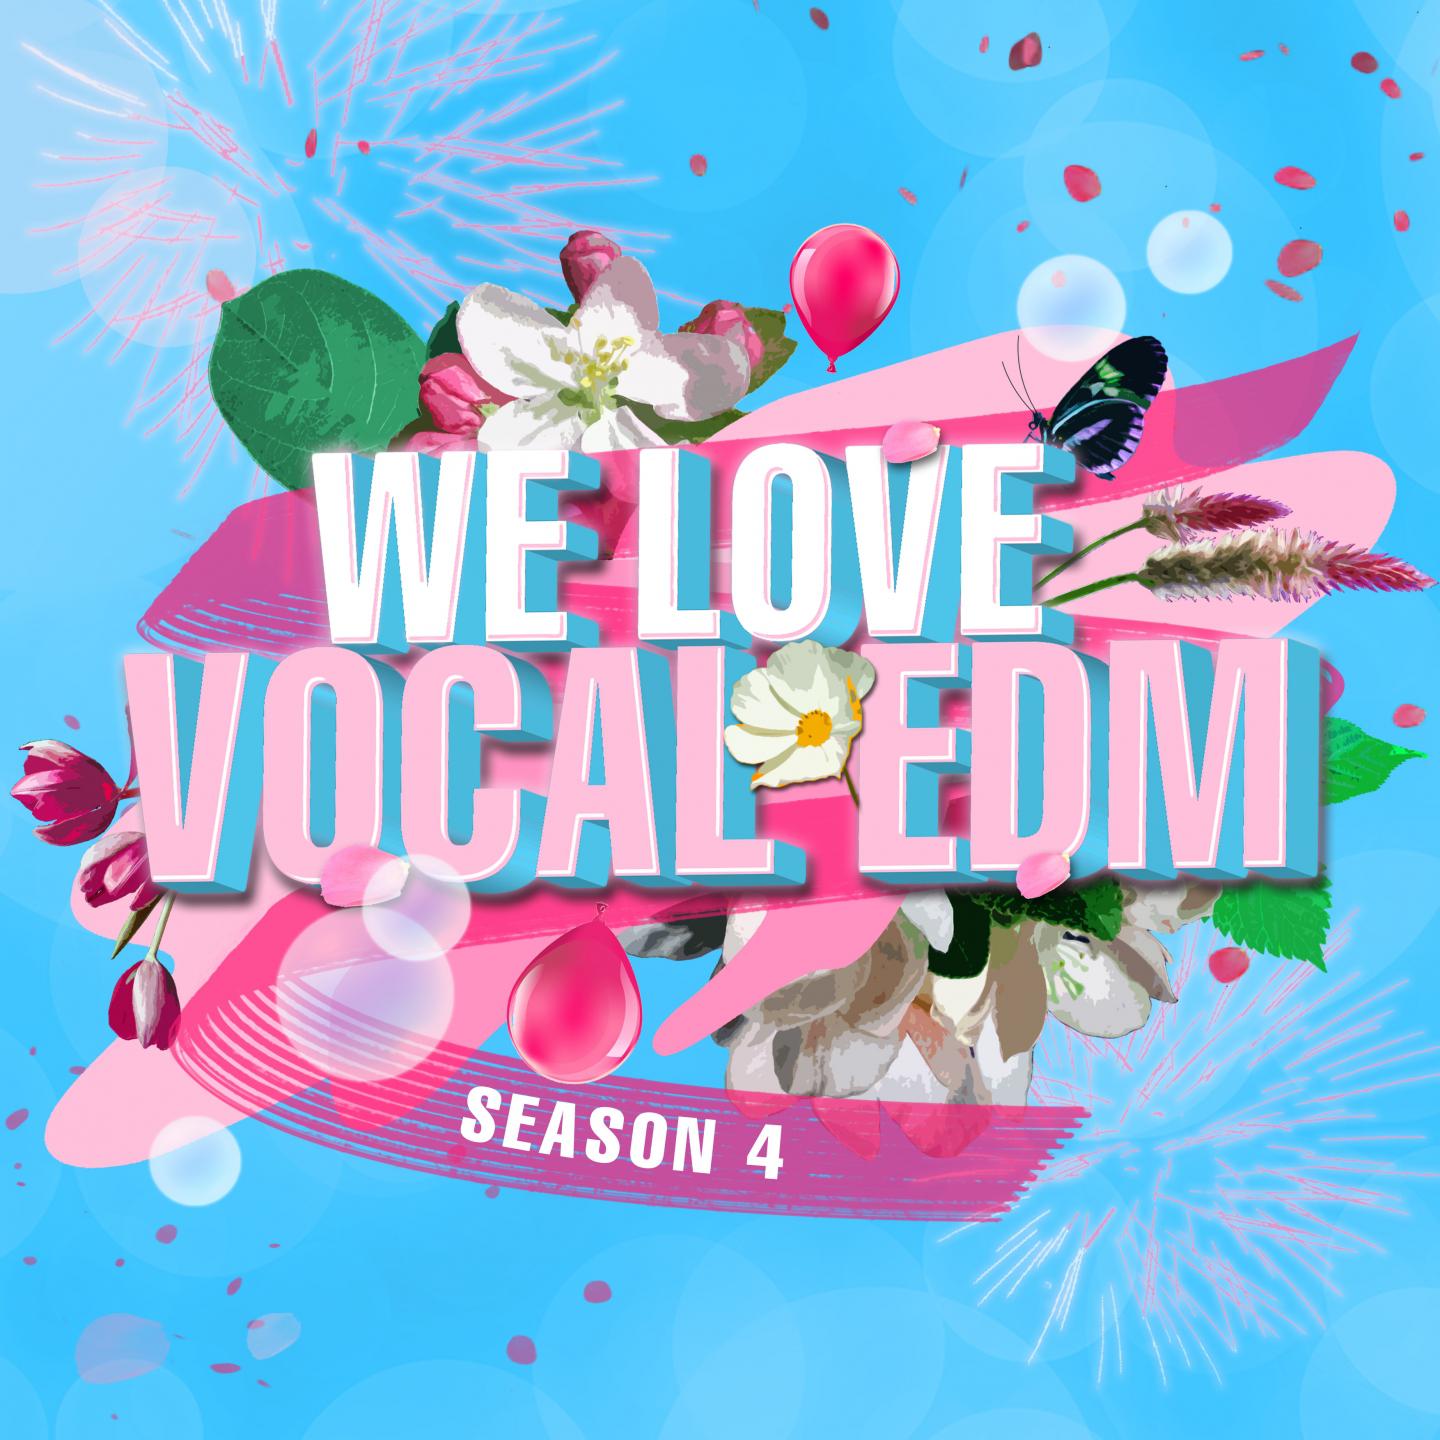 Lunisolar歌词 歌手SHAUN-专辑WE LOVE VOCAL EDM, Season 4-单曲《Lunisolar》LRC歌词下载